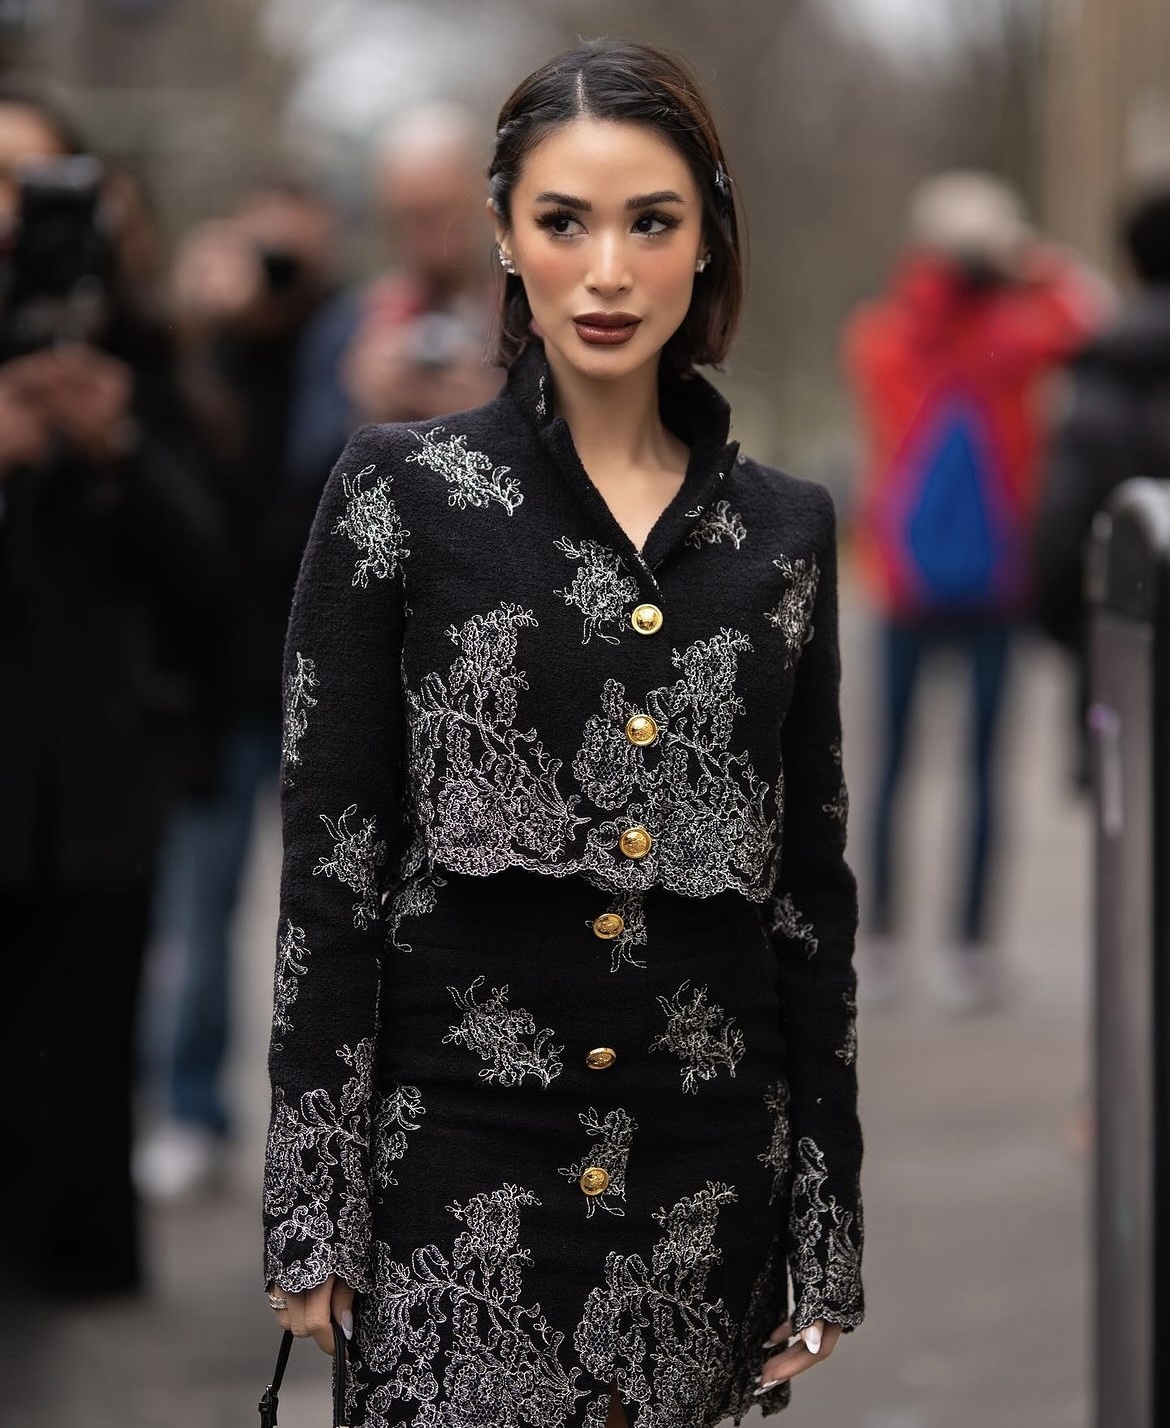 Heart Evangelista Walks at Paris Fashion Week 2024 phan huy